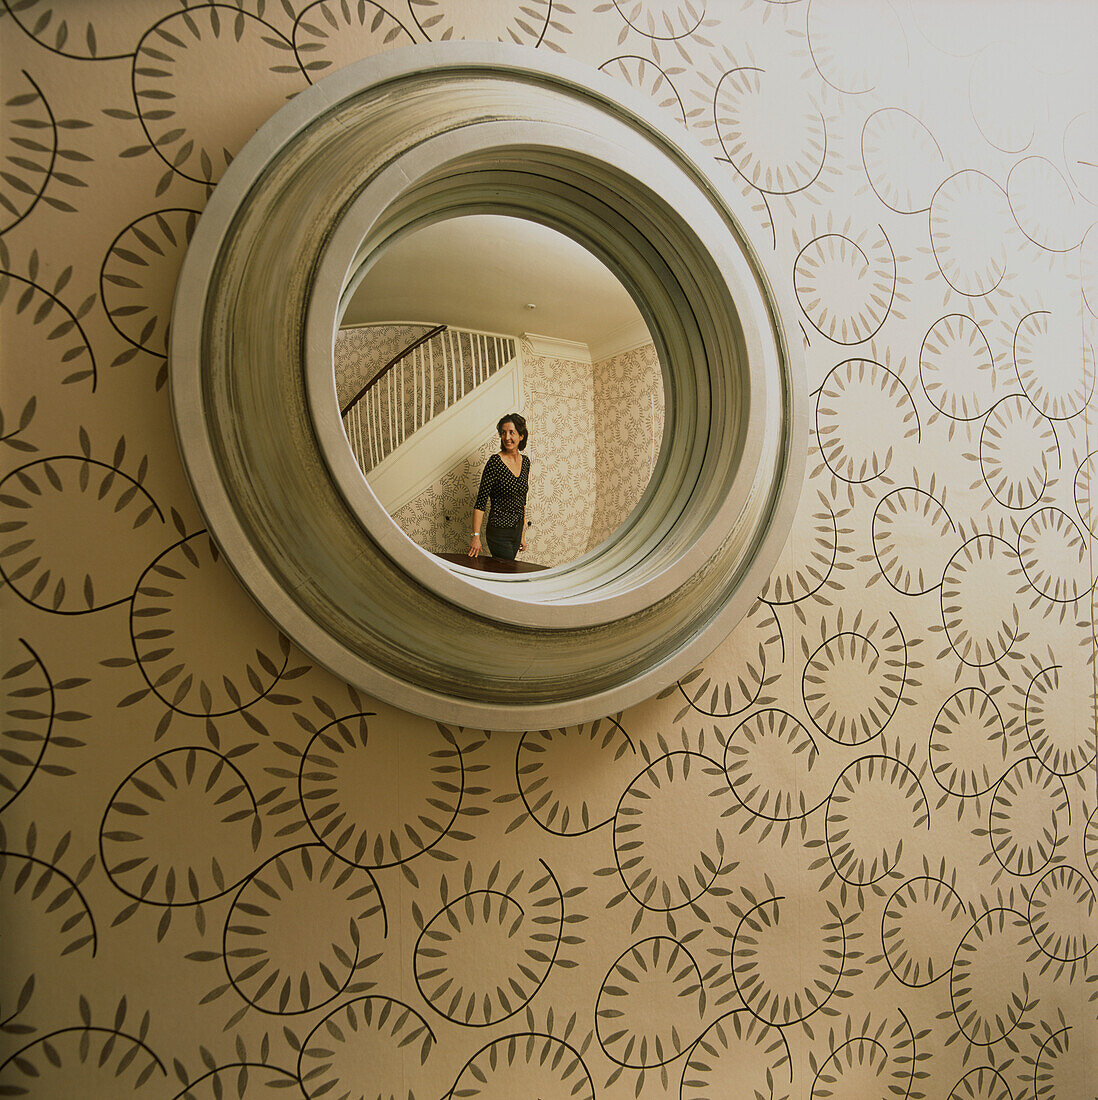 Mirror reflecting wallpapered hallway